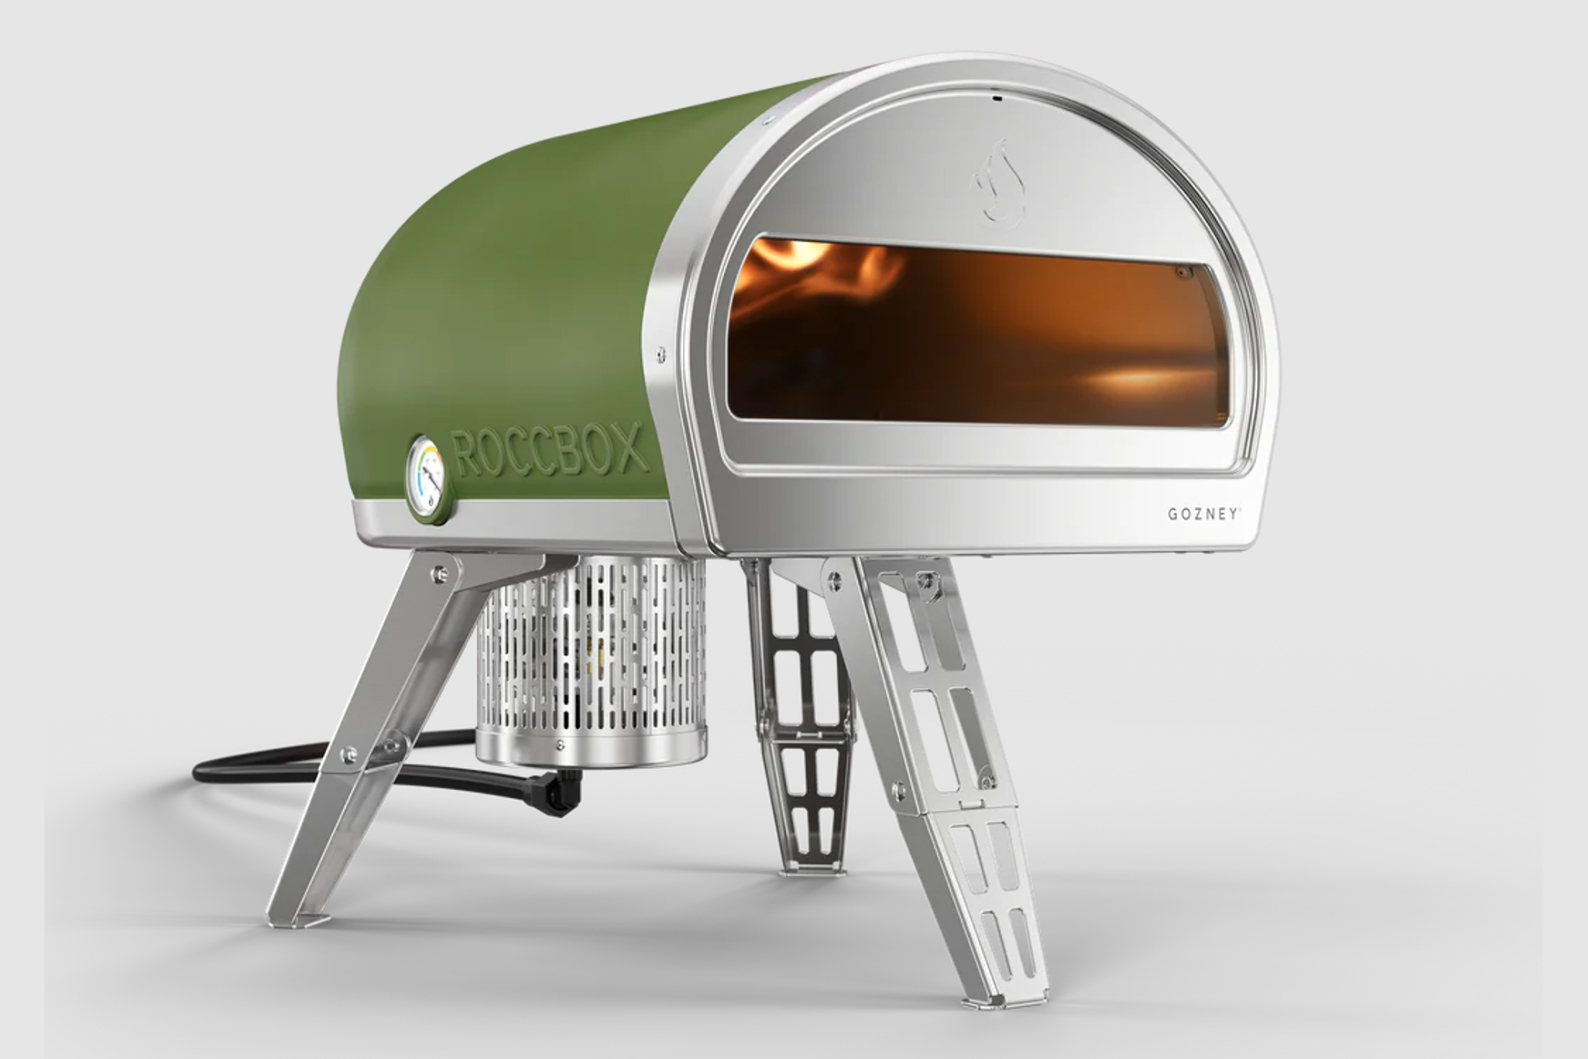 gozney roccboxx portable pizza oven